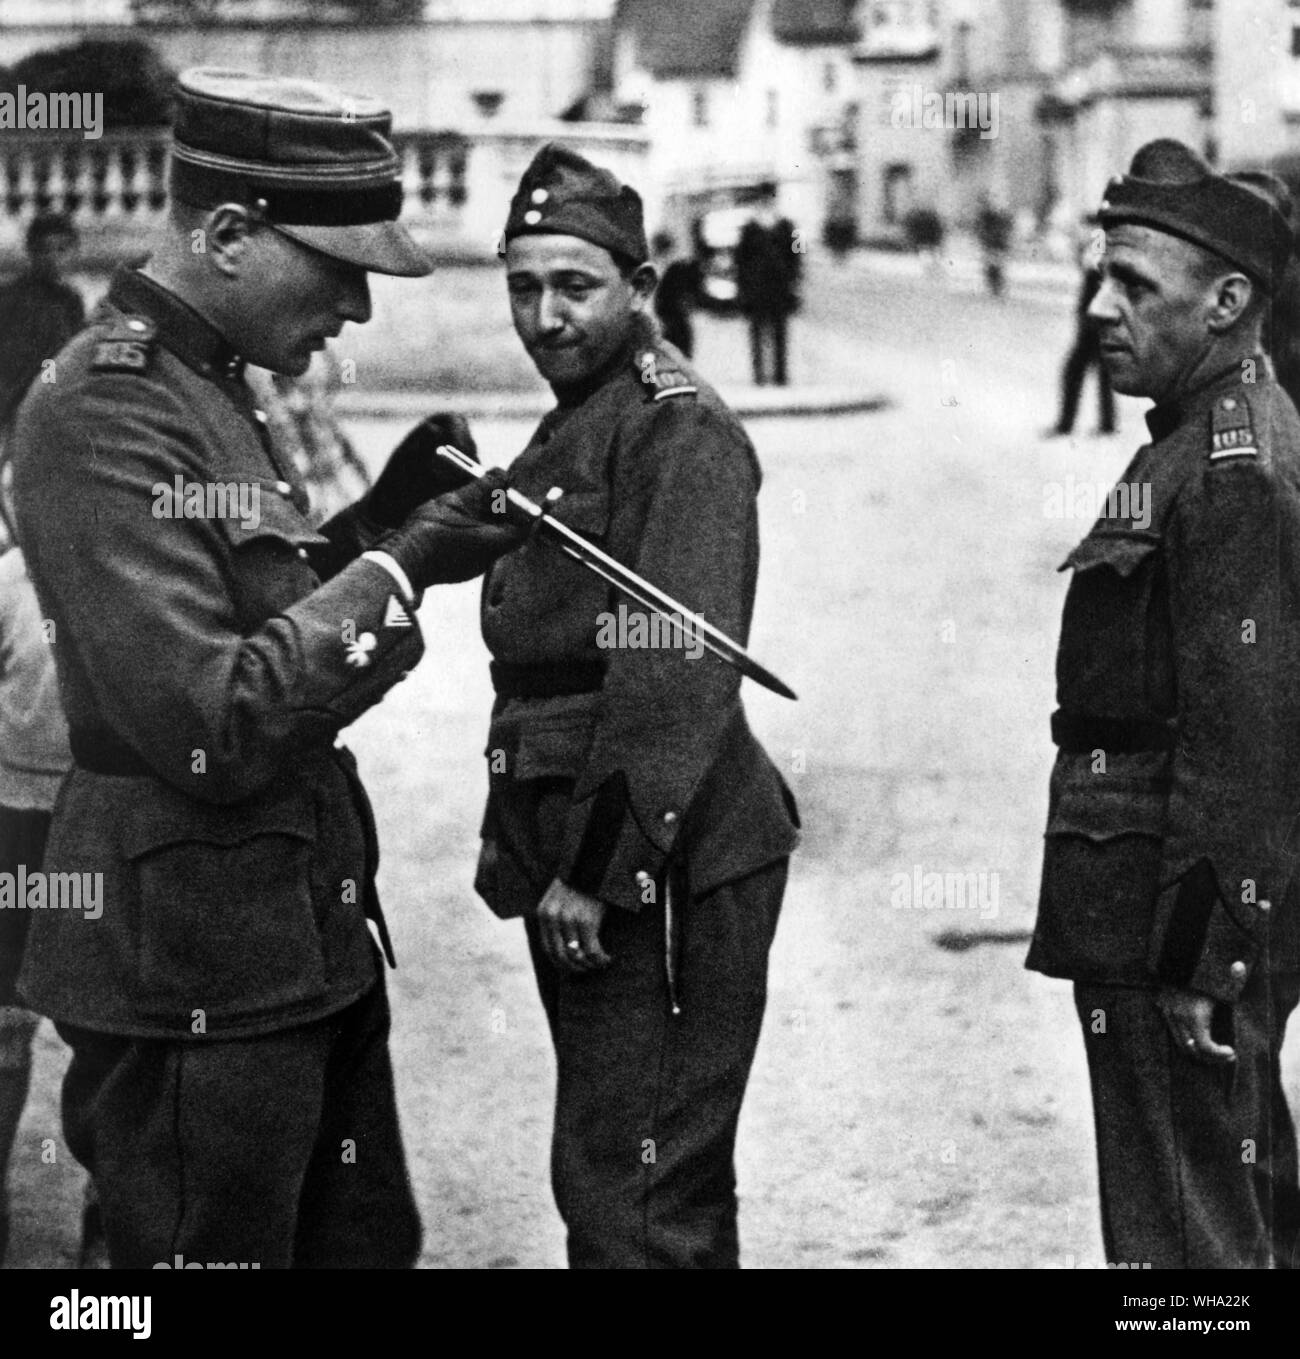 WW2: Italian troops (?) (Check uniforms). Stock Photo